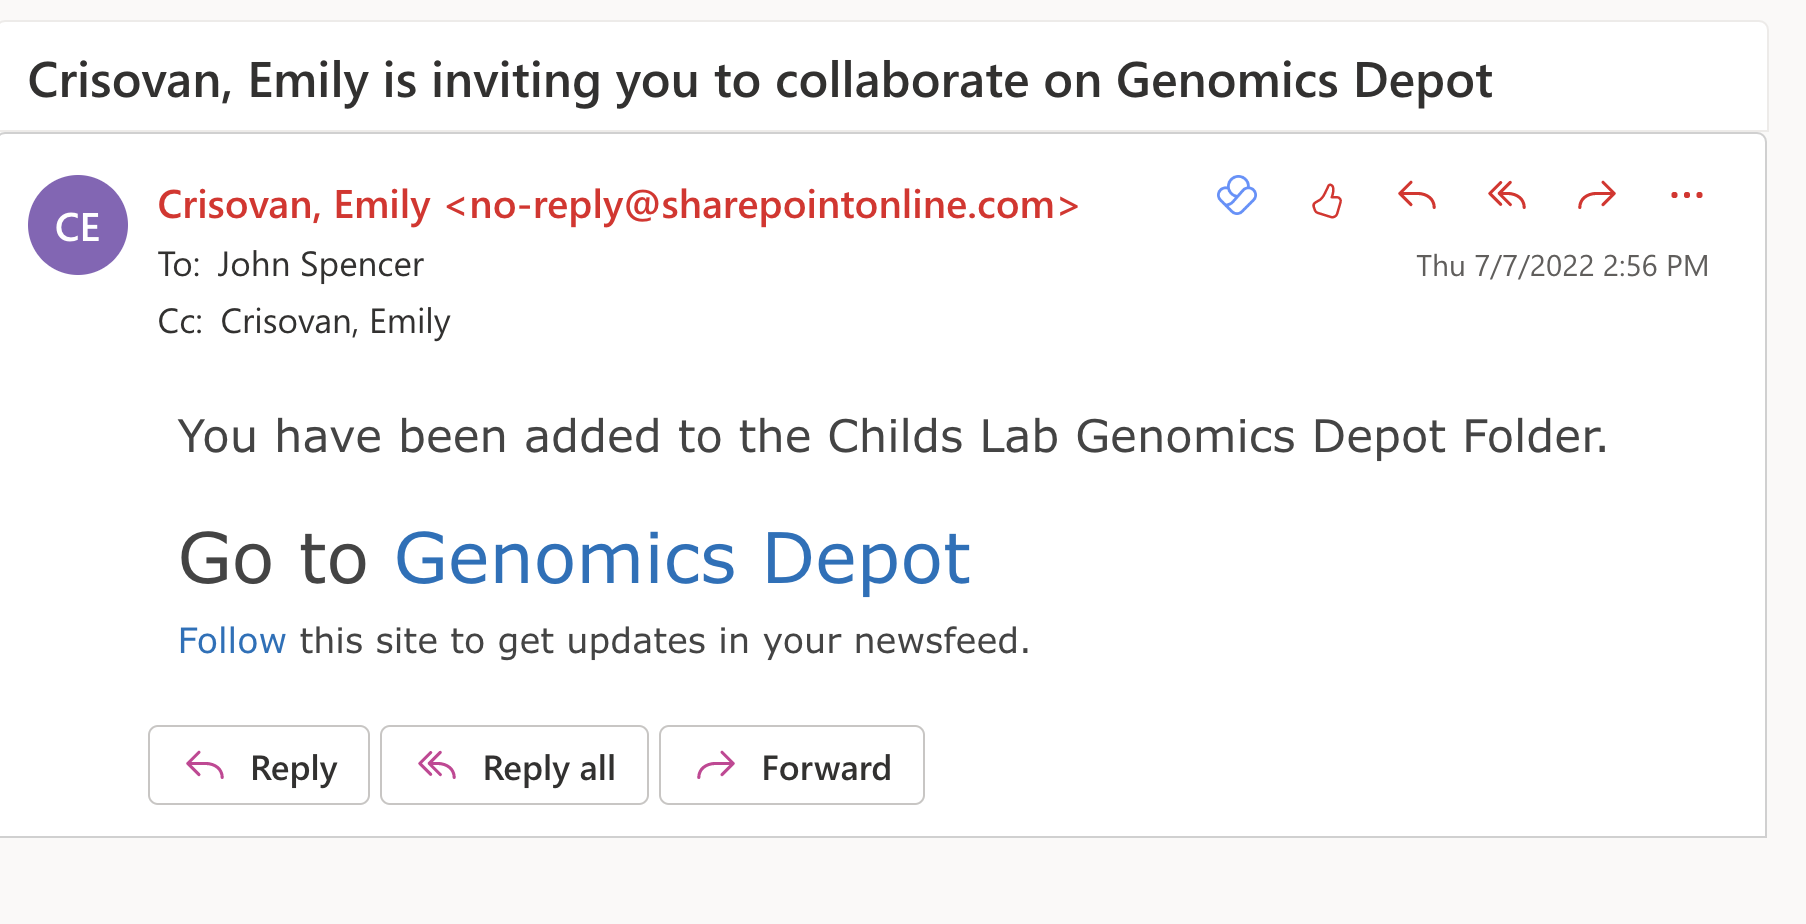 image of Genomics Depot invitation email